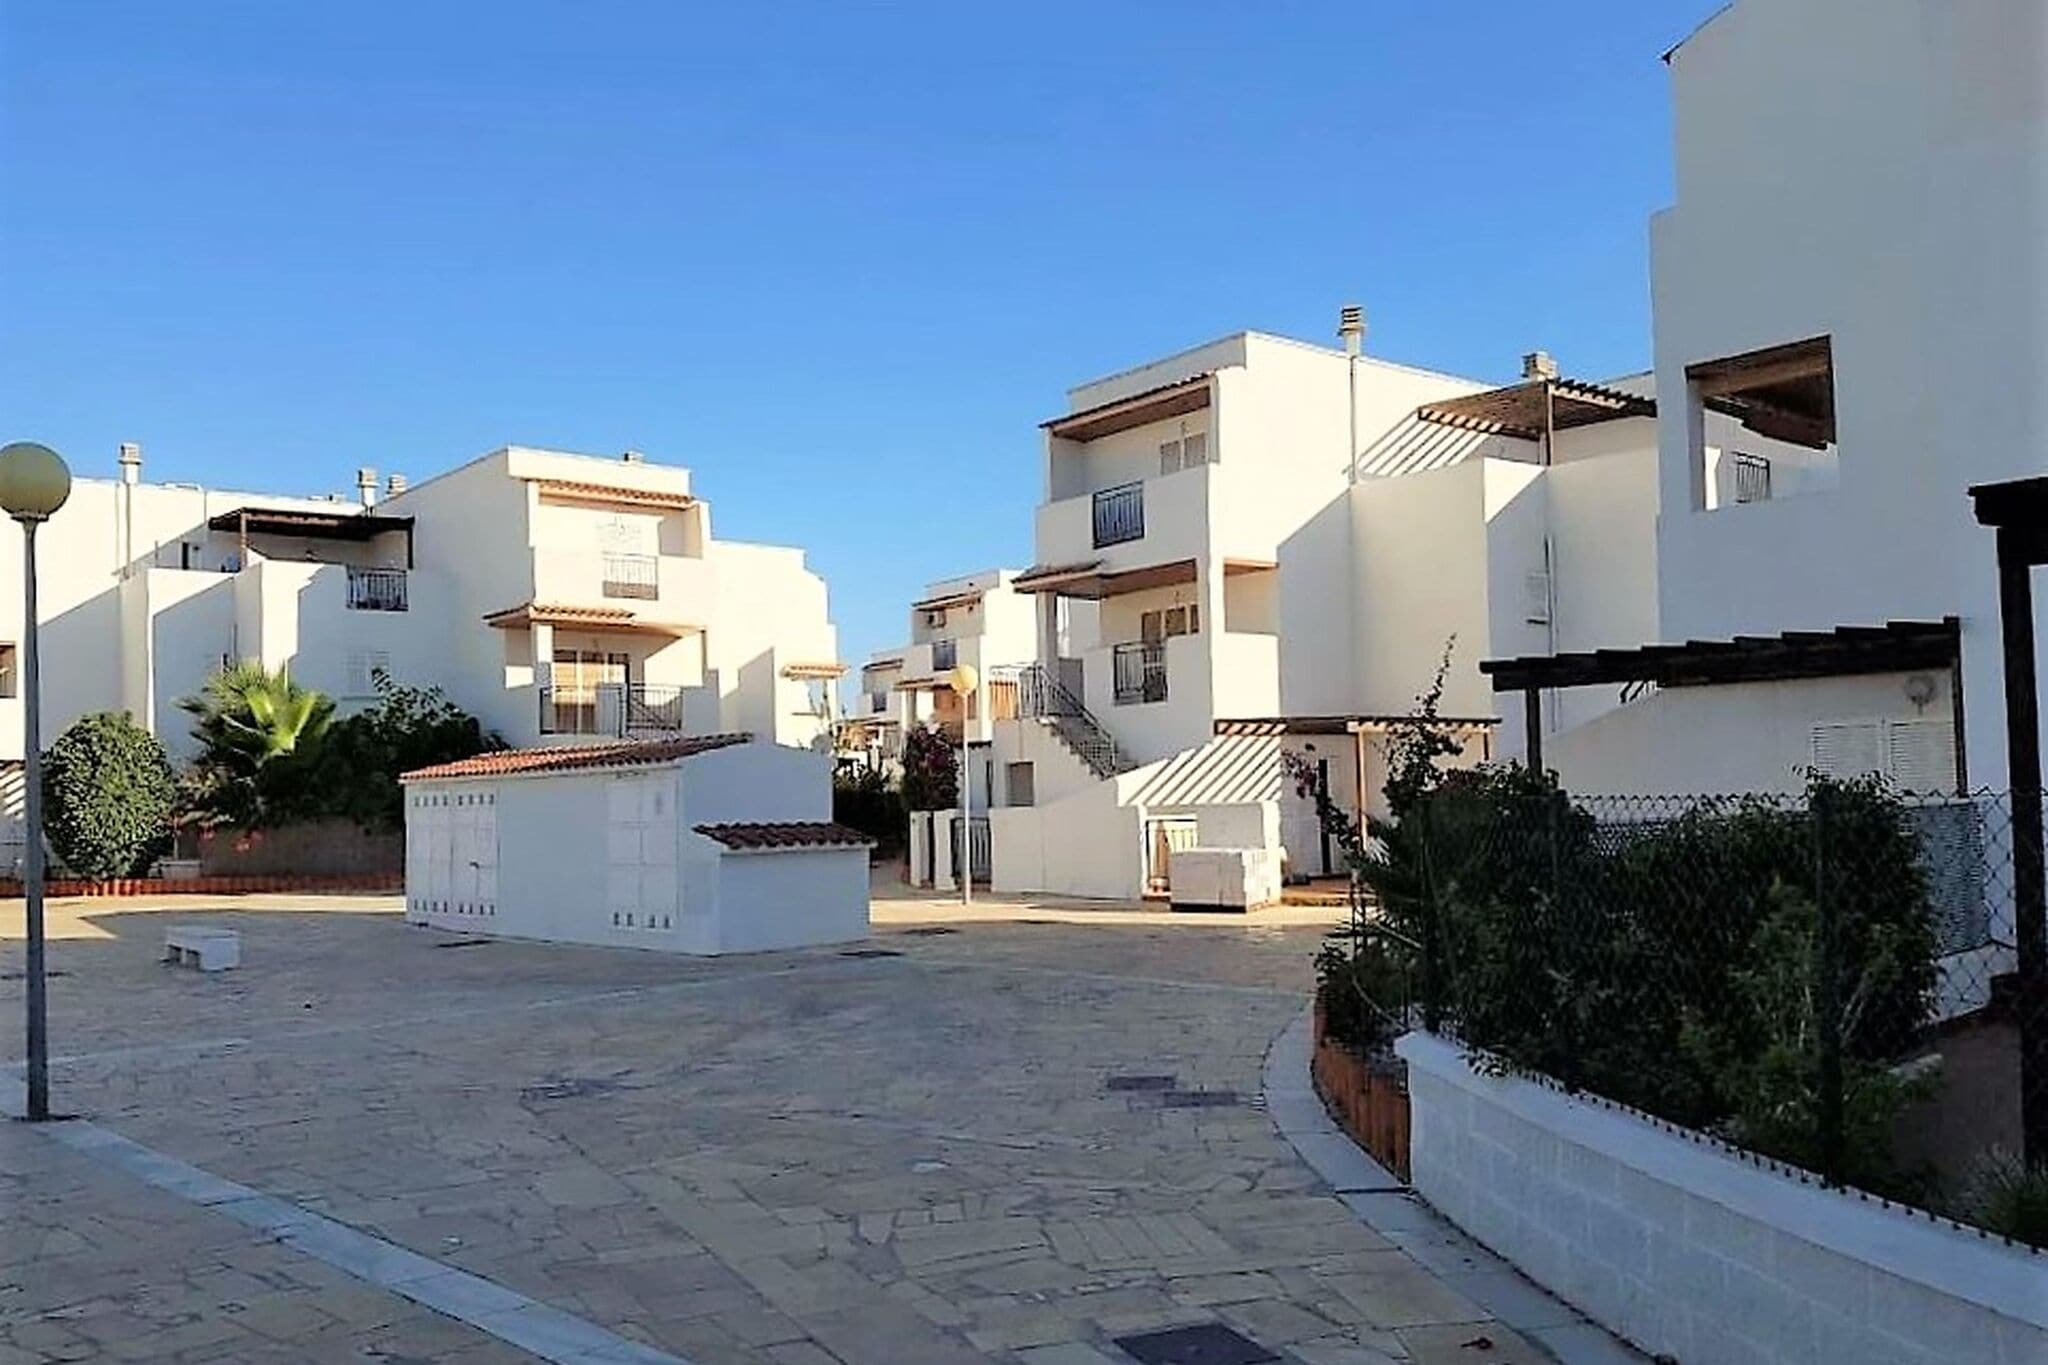 Premium apartment in Vera Playa near the sea beach